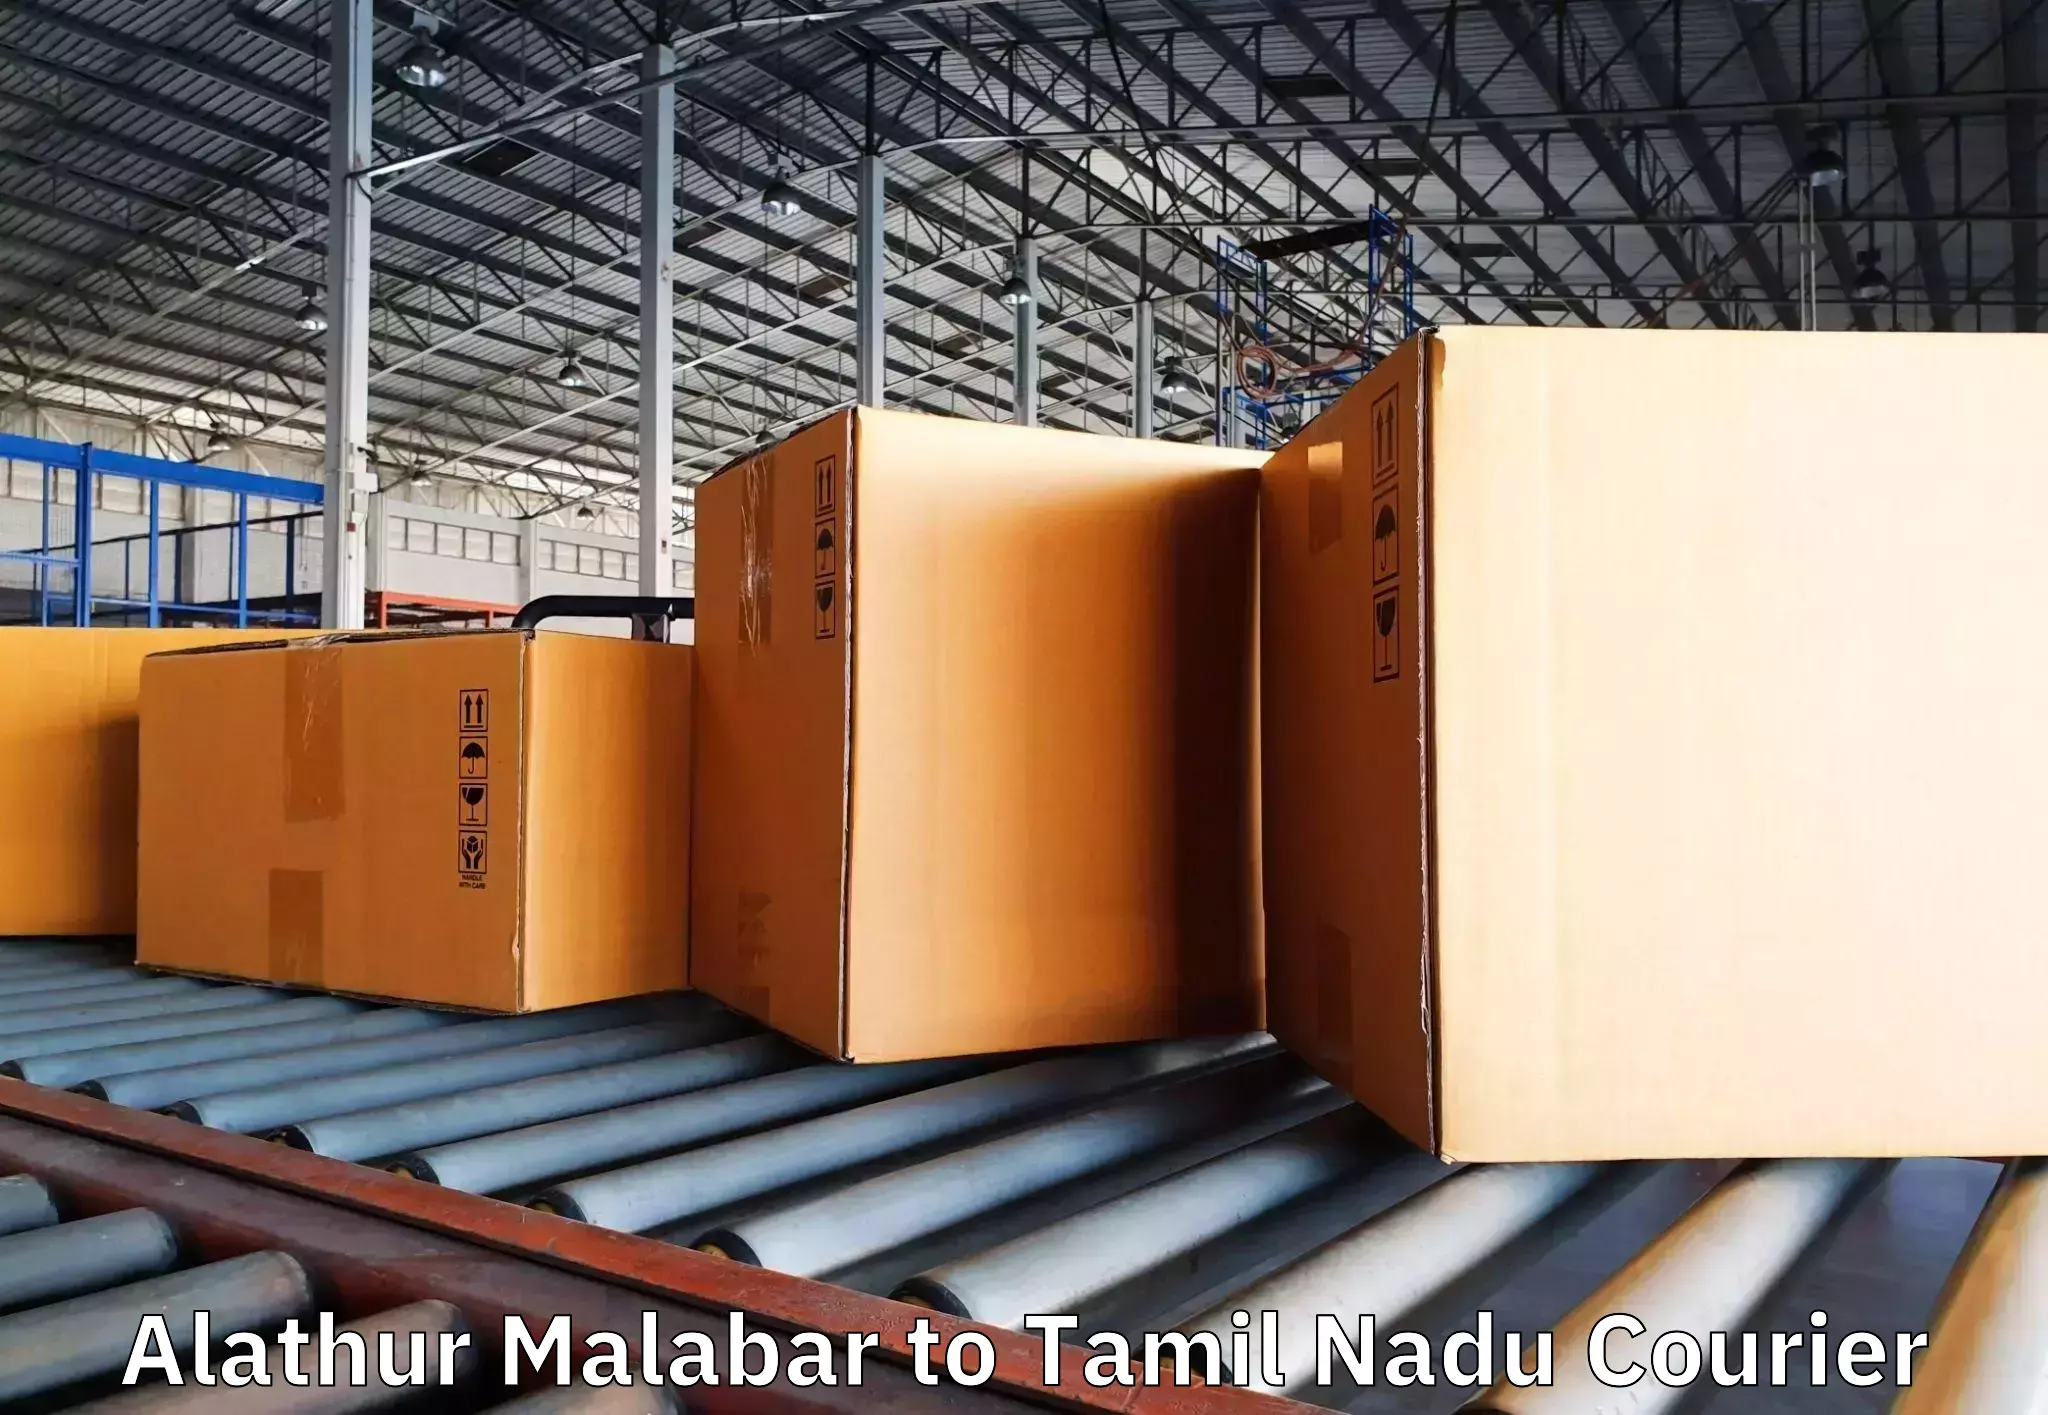 Seamless moving process Alathur Malabar to Mayiladuthurai